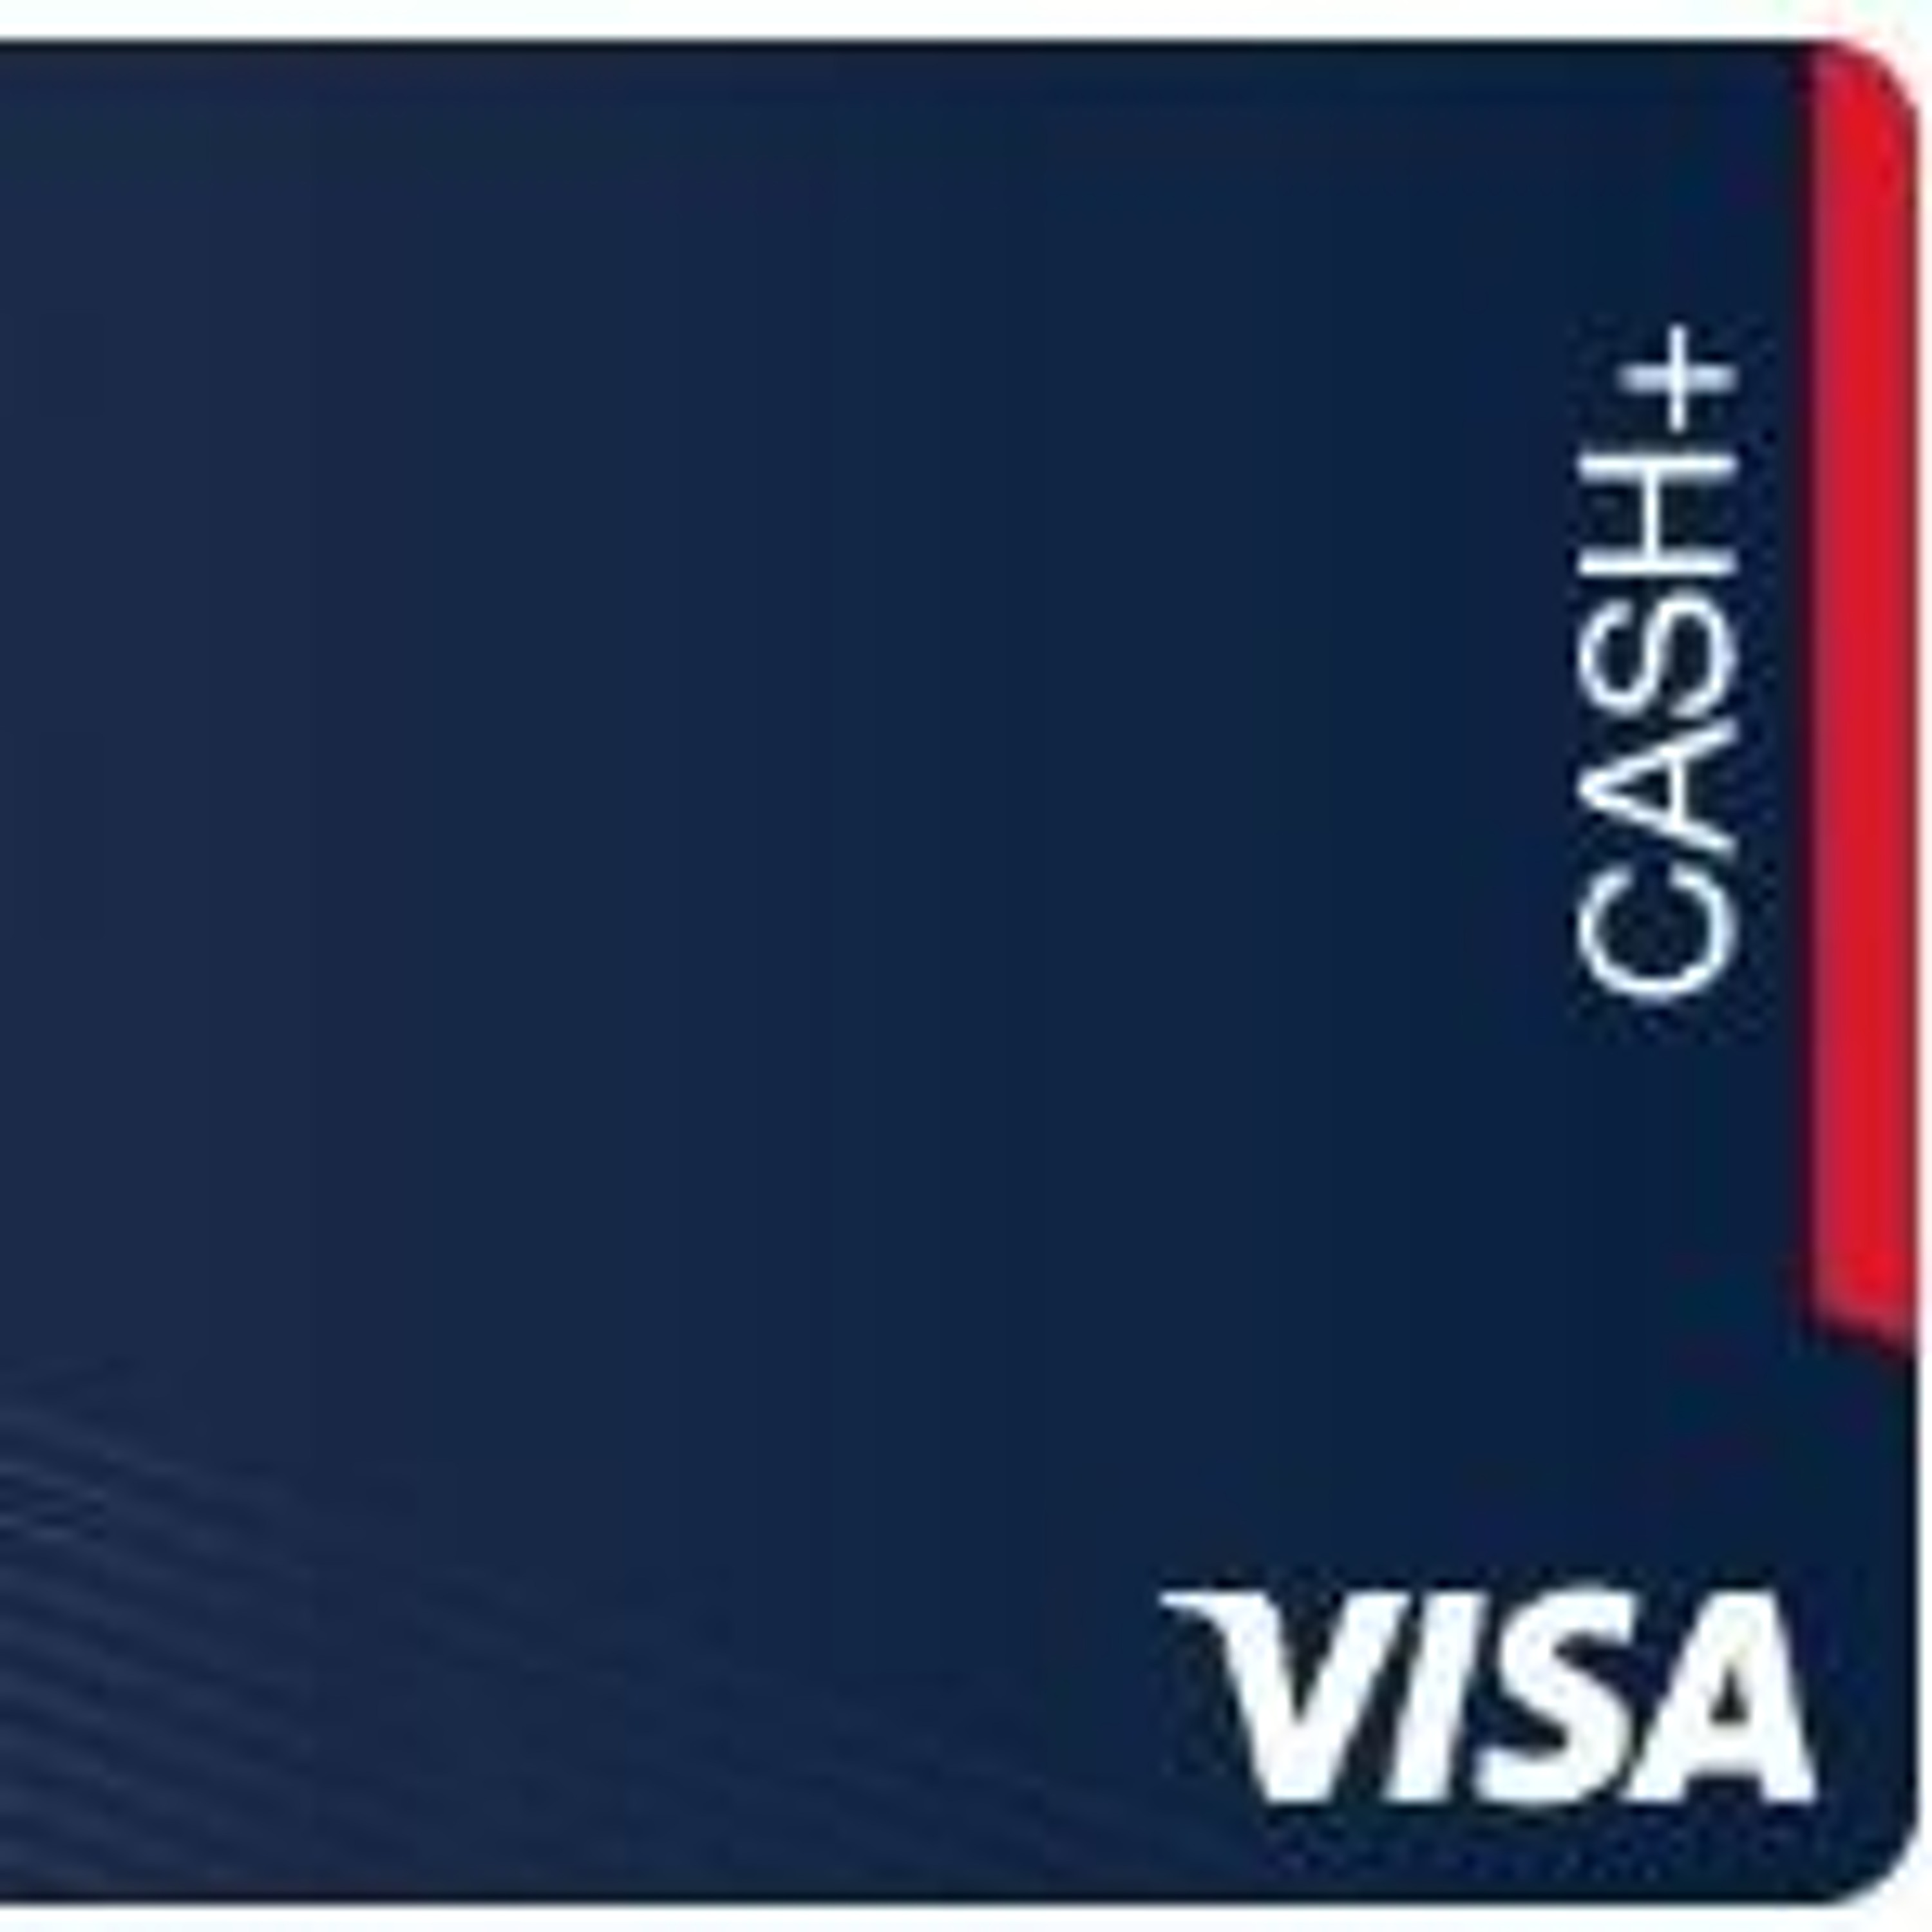 Episode 50: US Bank Cash+ Credit Card Review